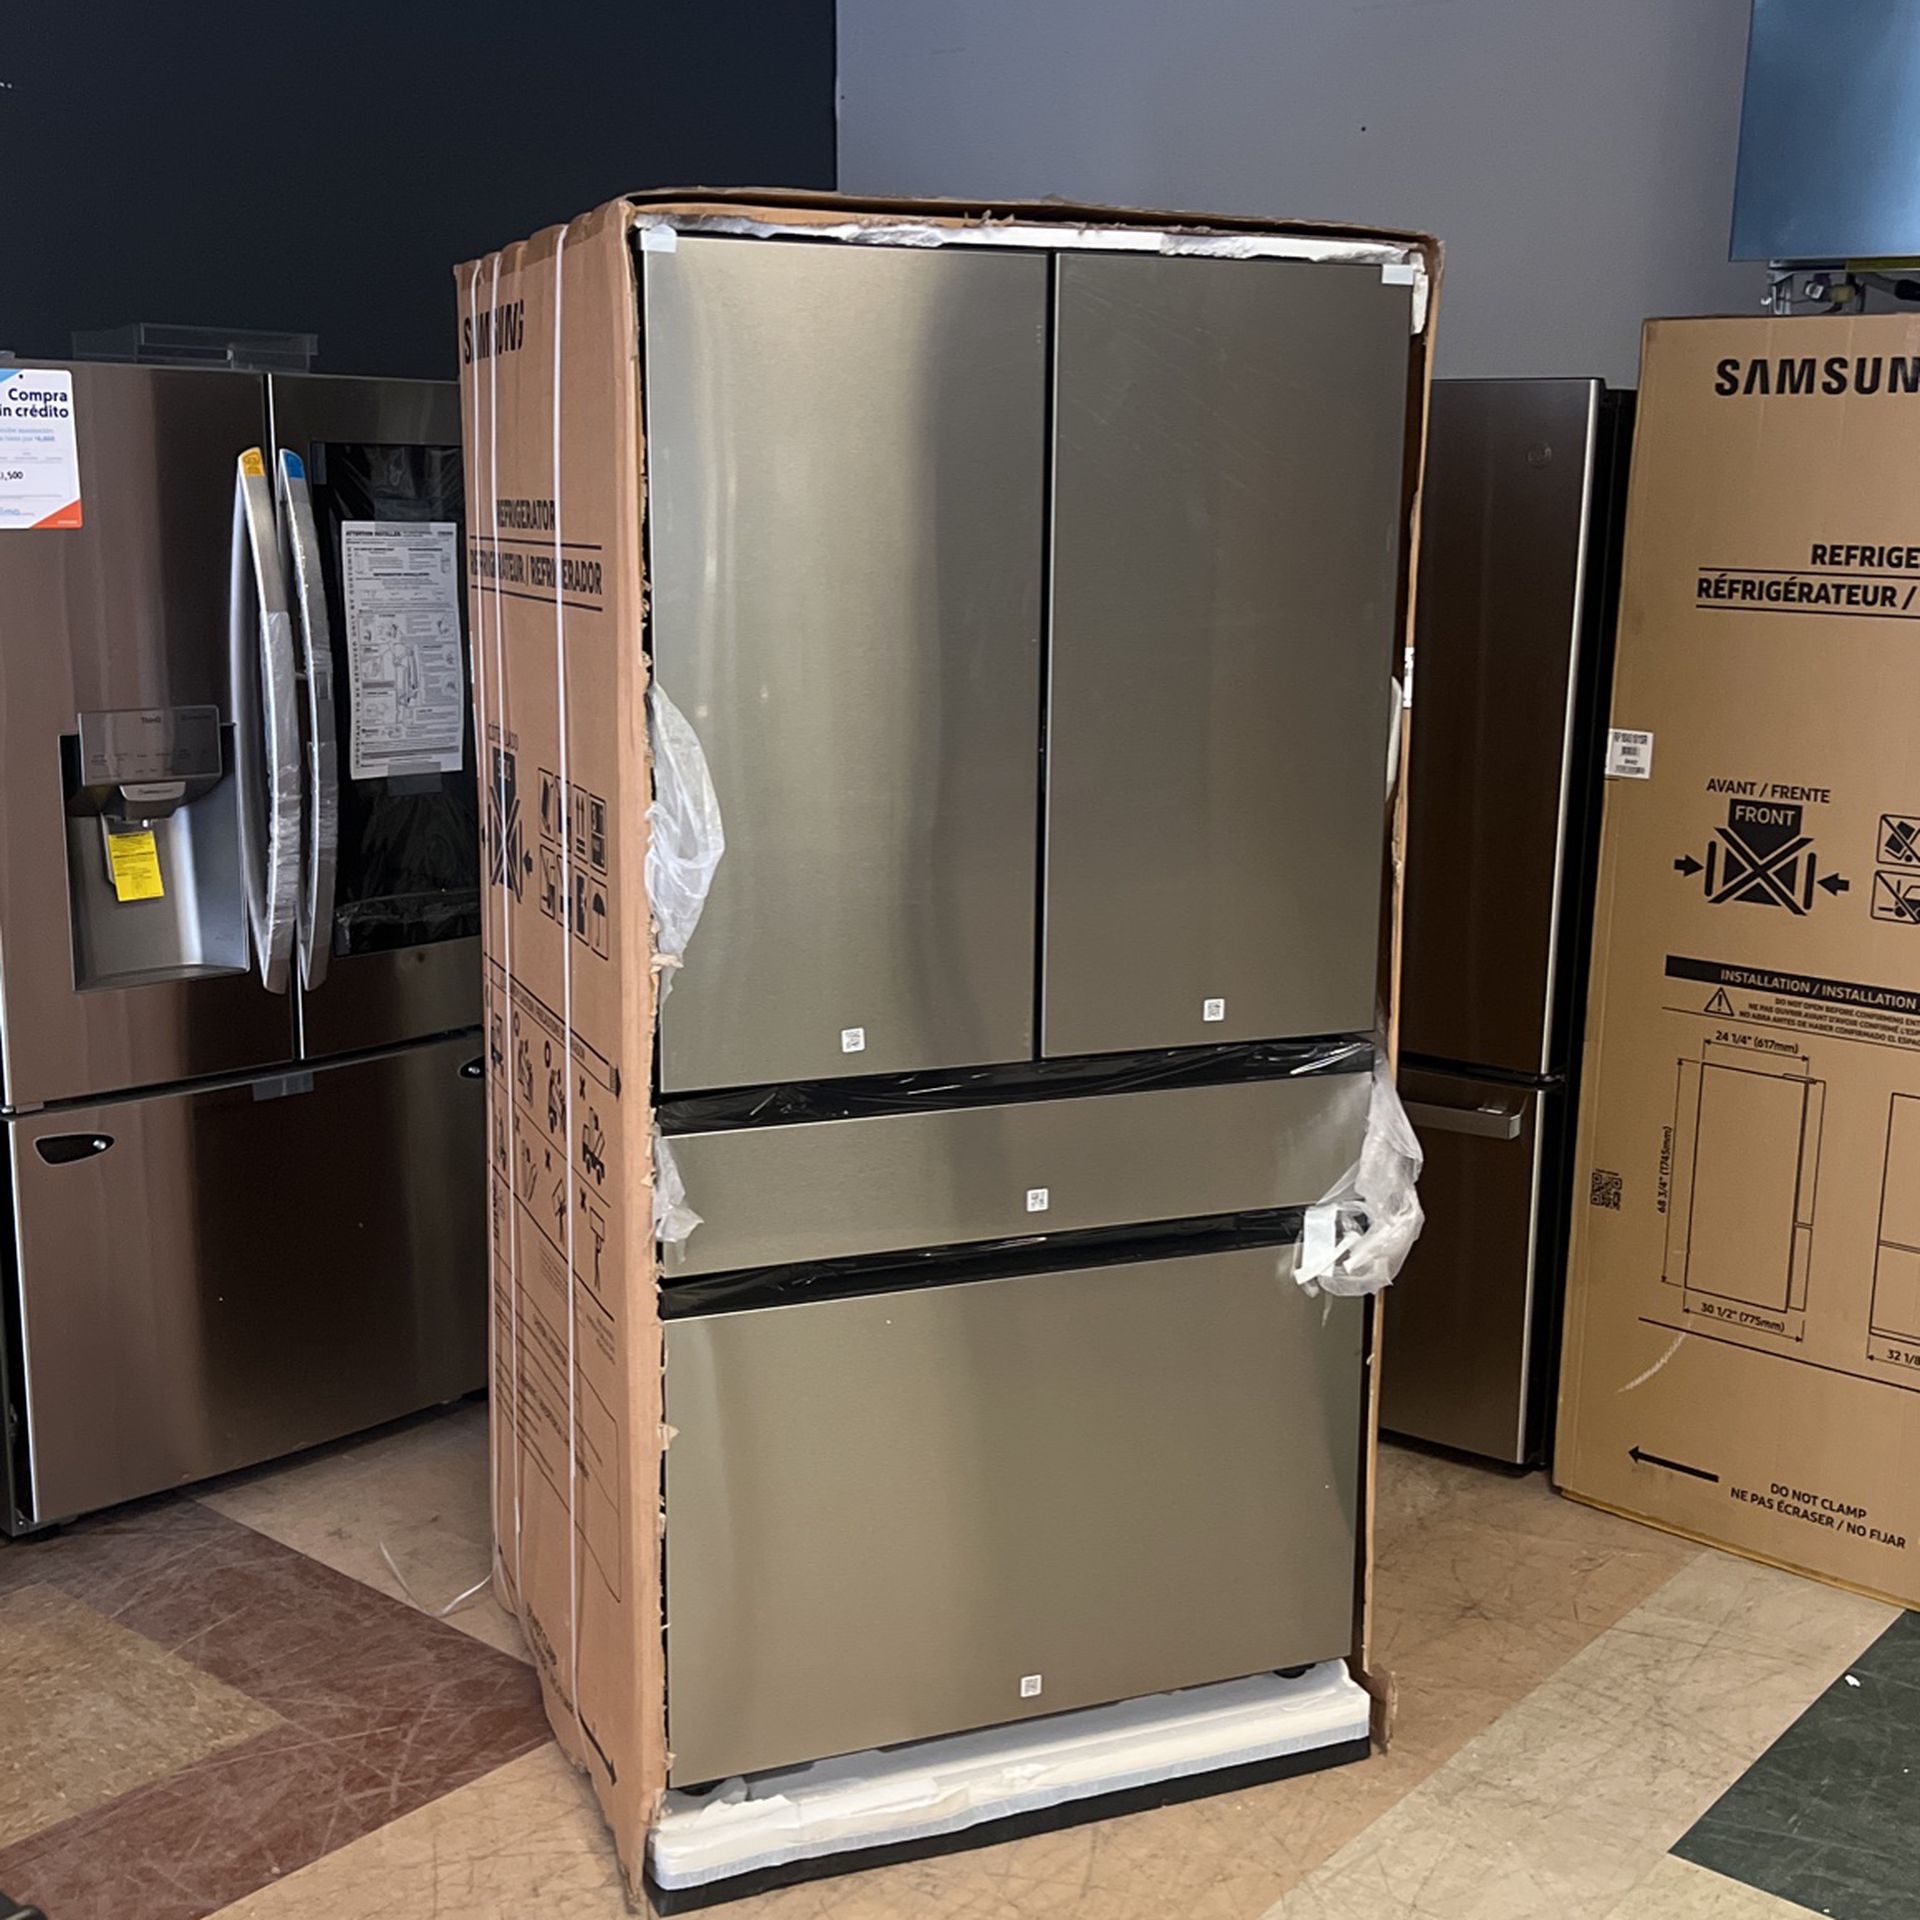 Samsung Bespoke 29 Cu Ft Four Door Refrigerator With Autofill Water Pitcher 